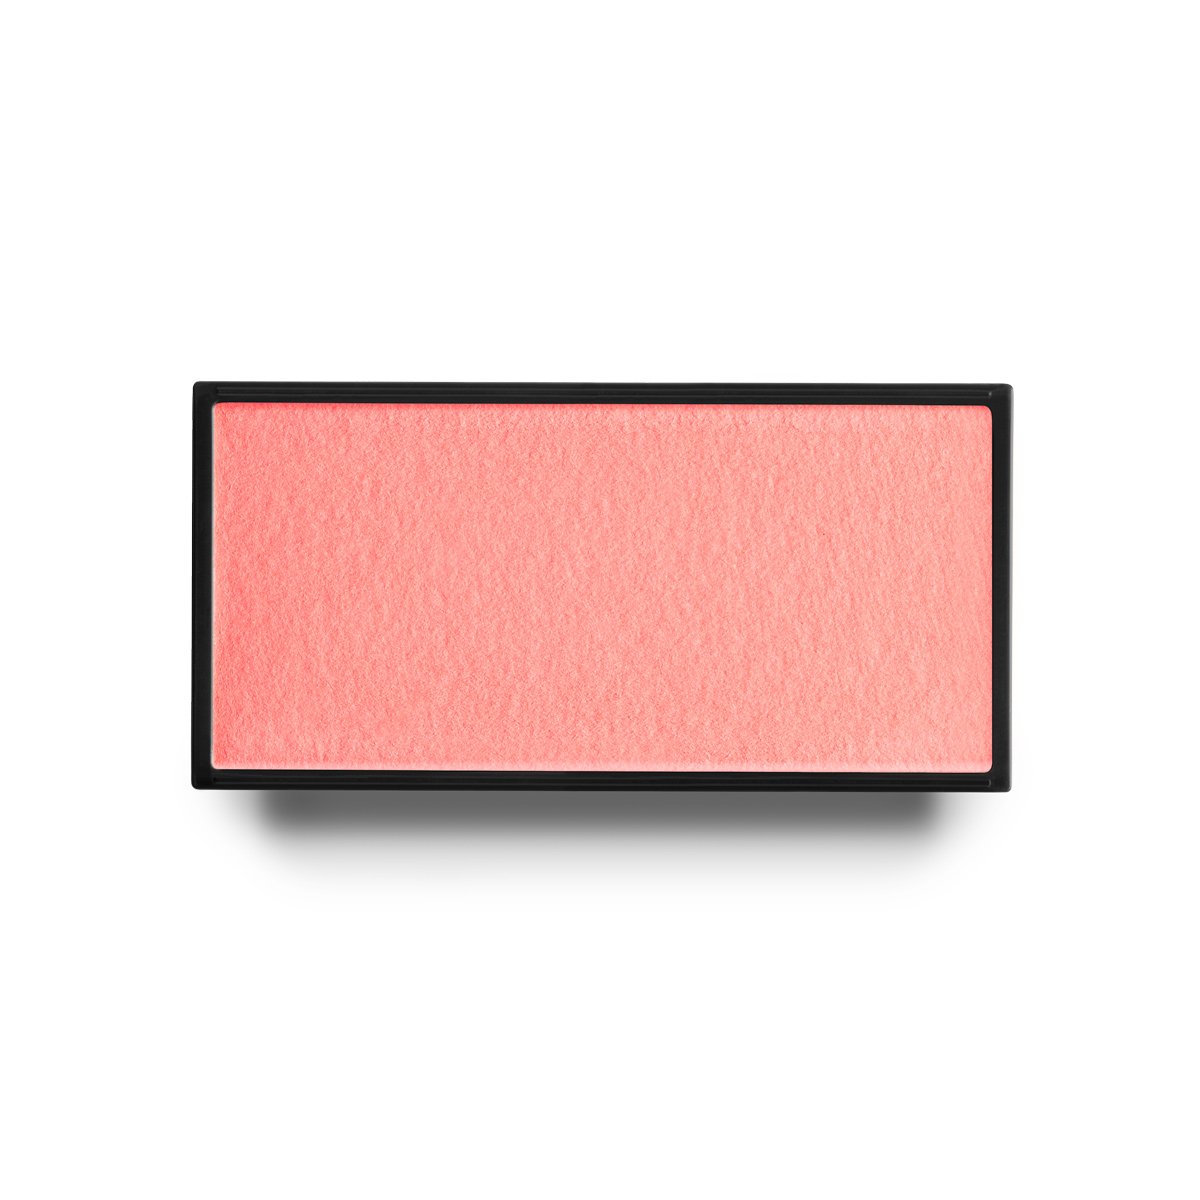 PARFAIT - PINKY CORAL - matte finish powder blush in pink coral shade